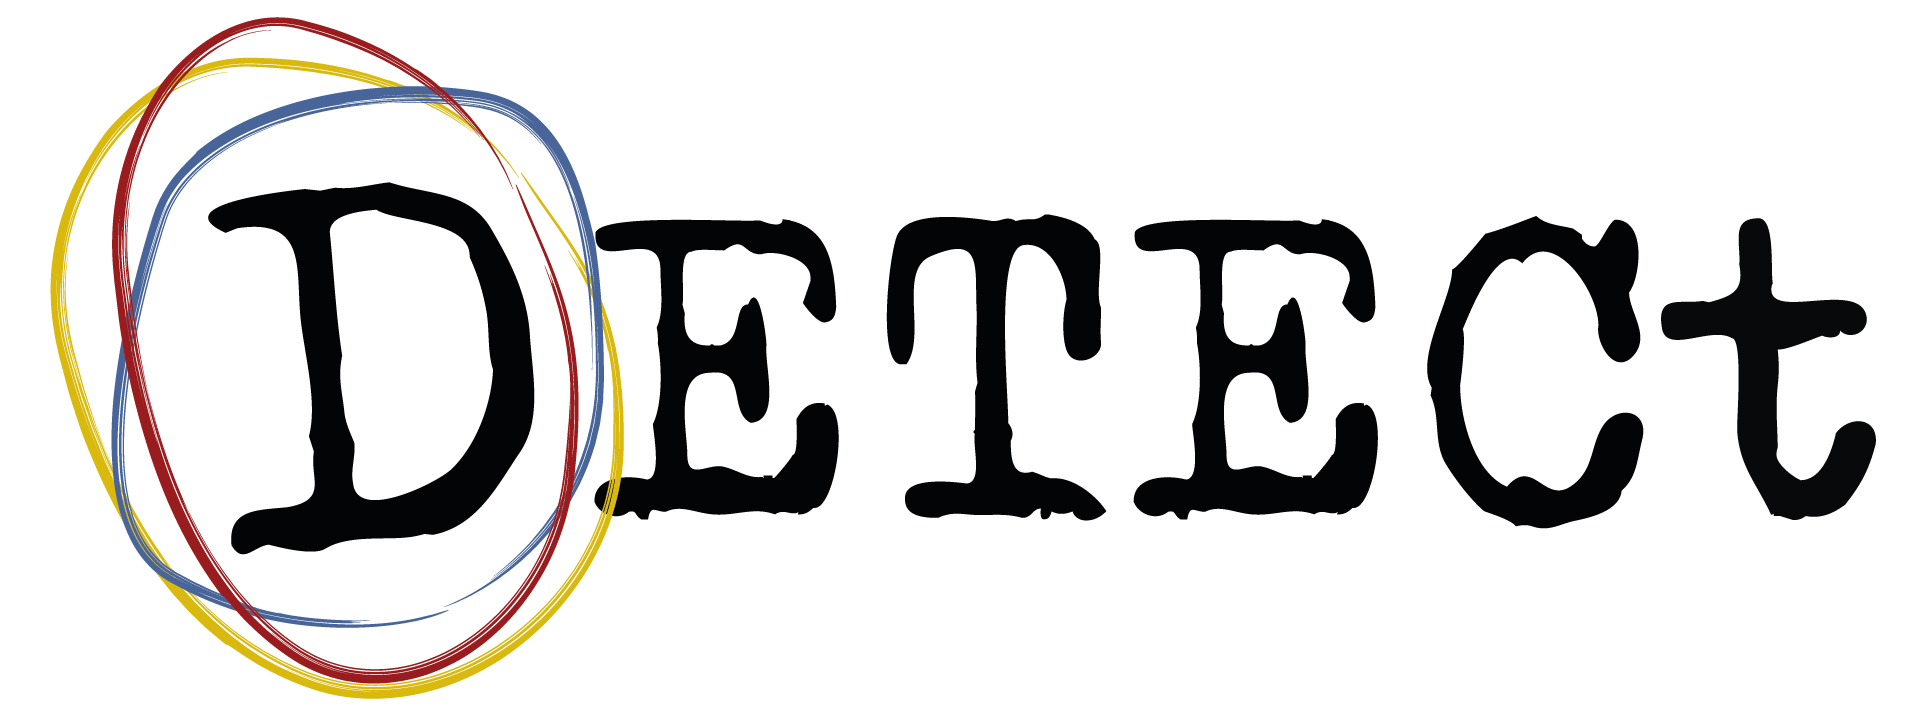 DETECT logo